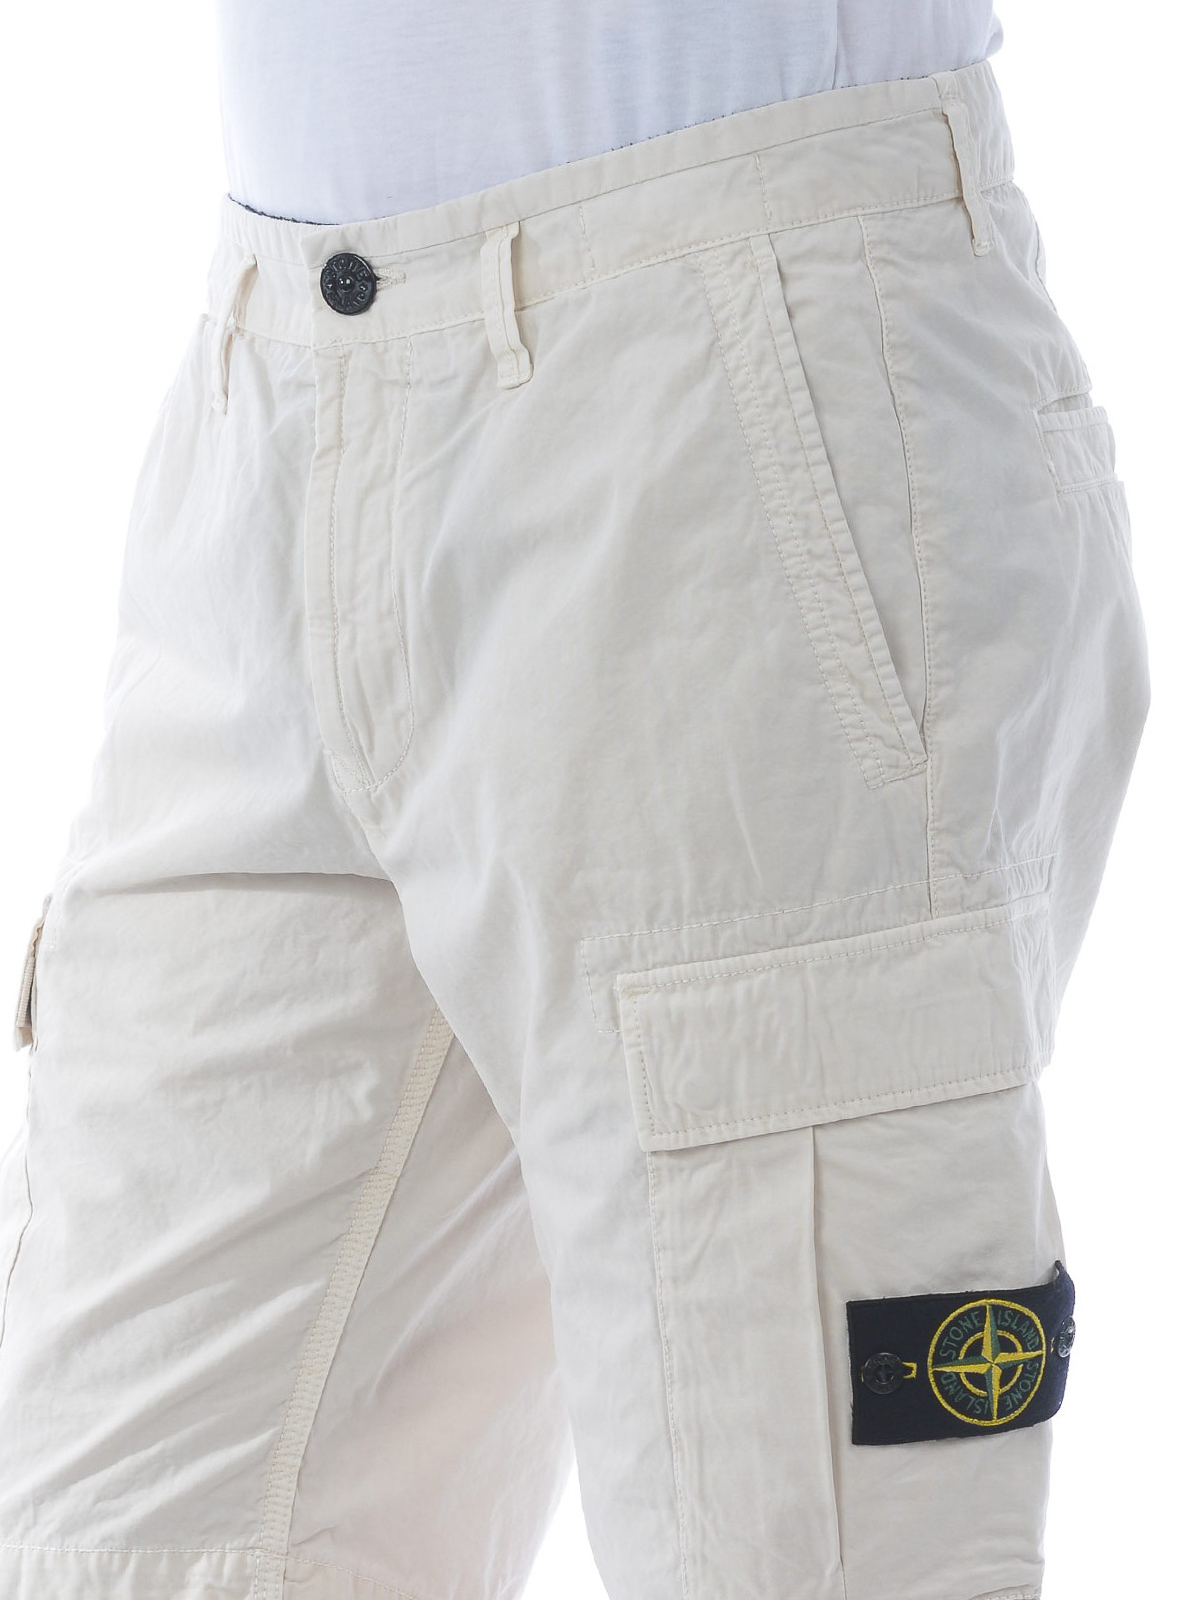 stone island cargo pants white